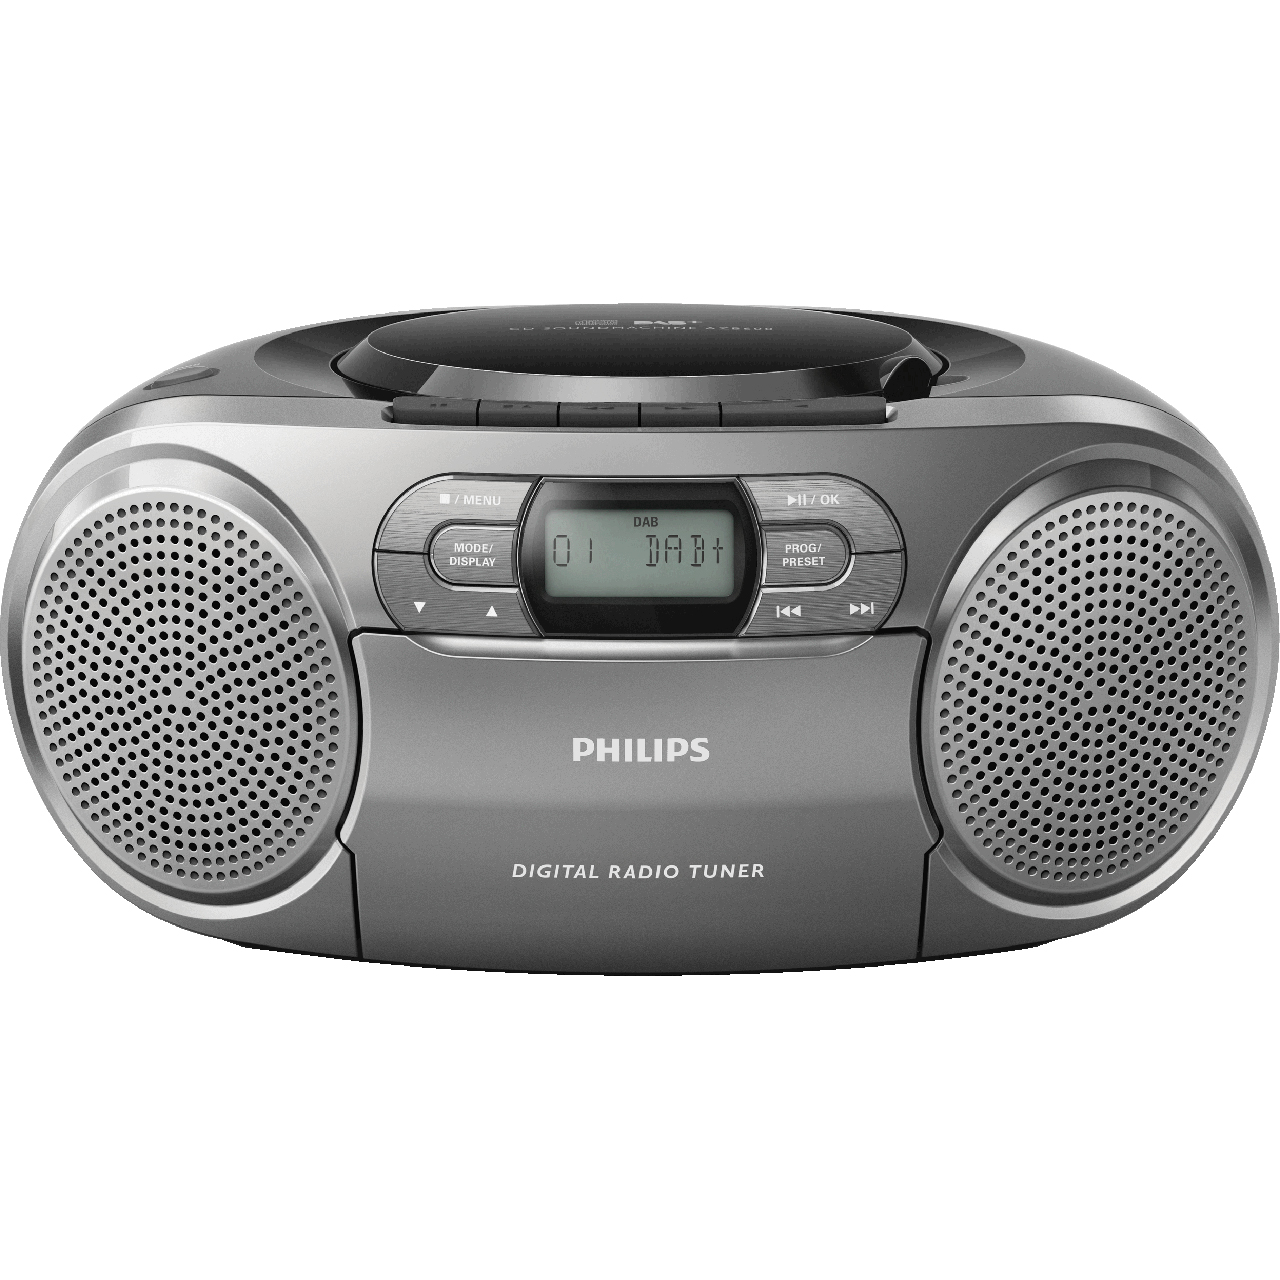 Philips AZB600/12 DAB / DAB+ Digital Radio with FM Tuner Review